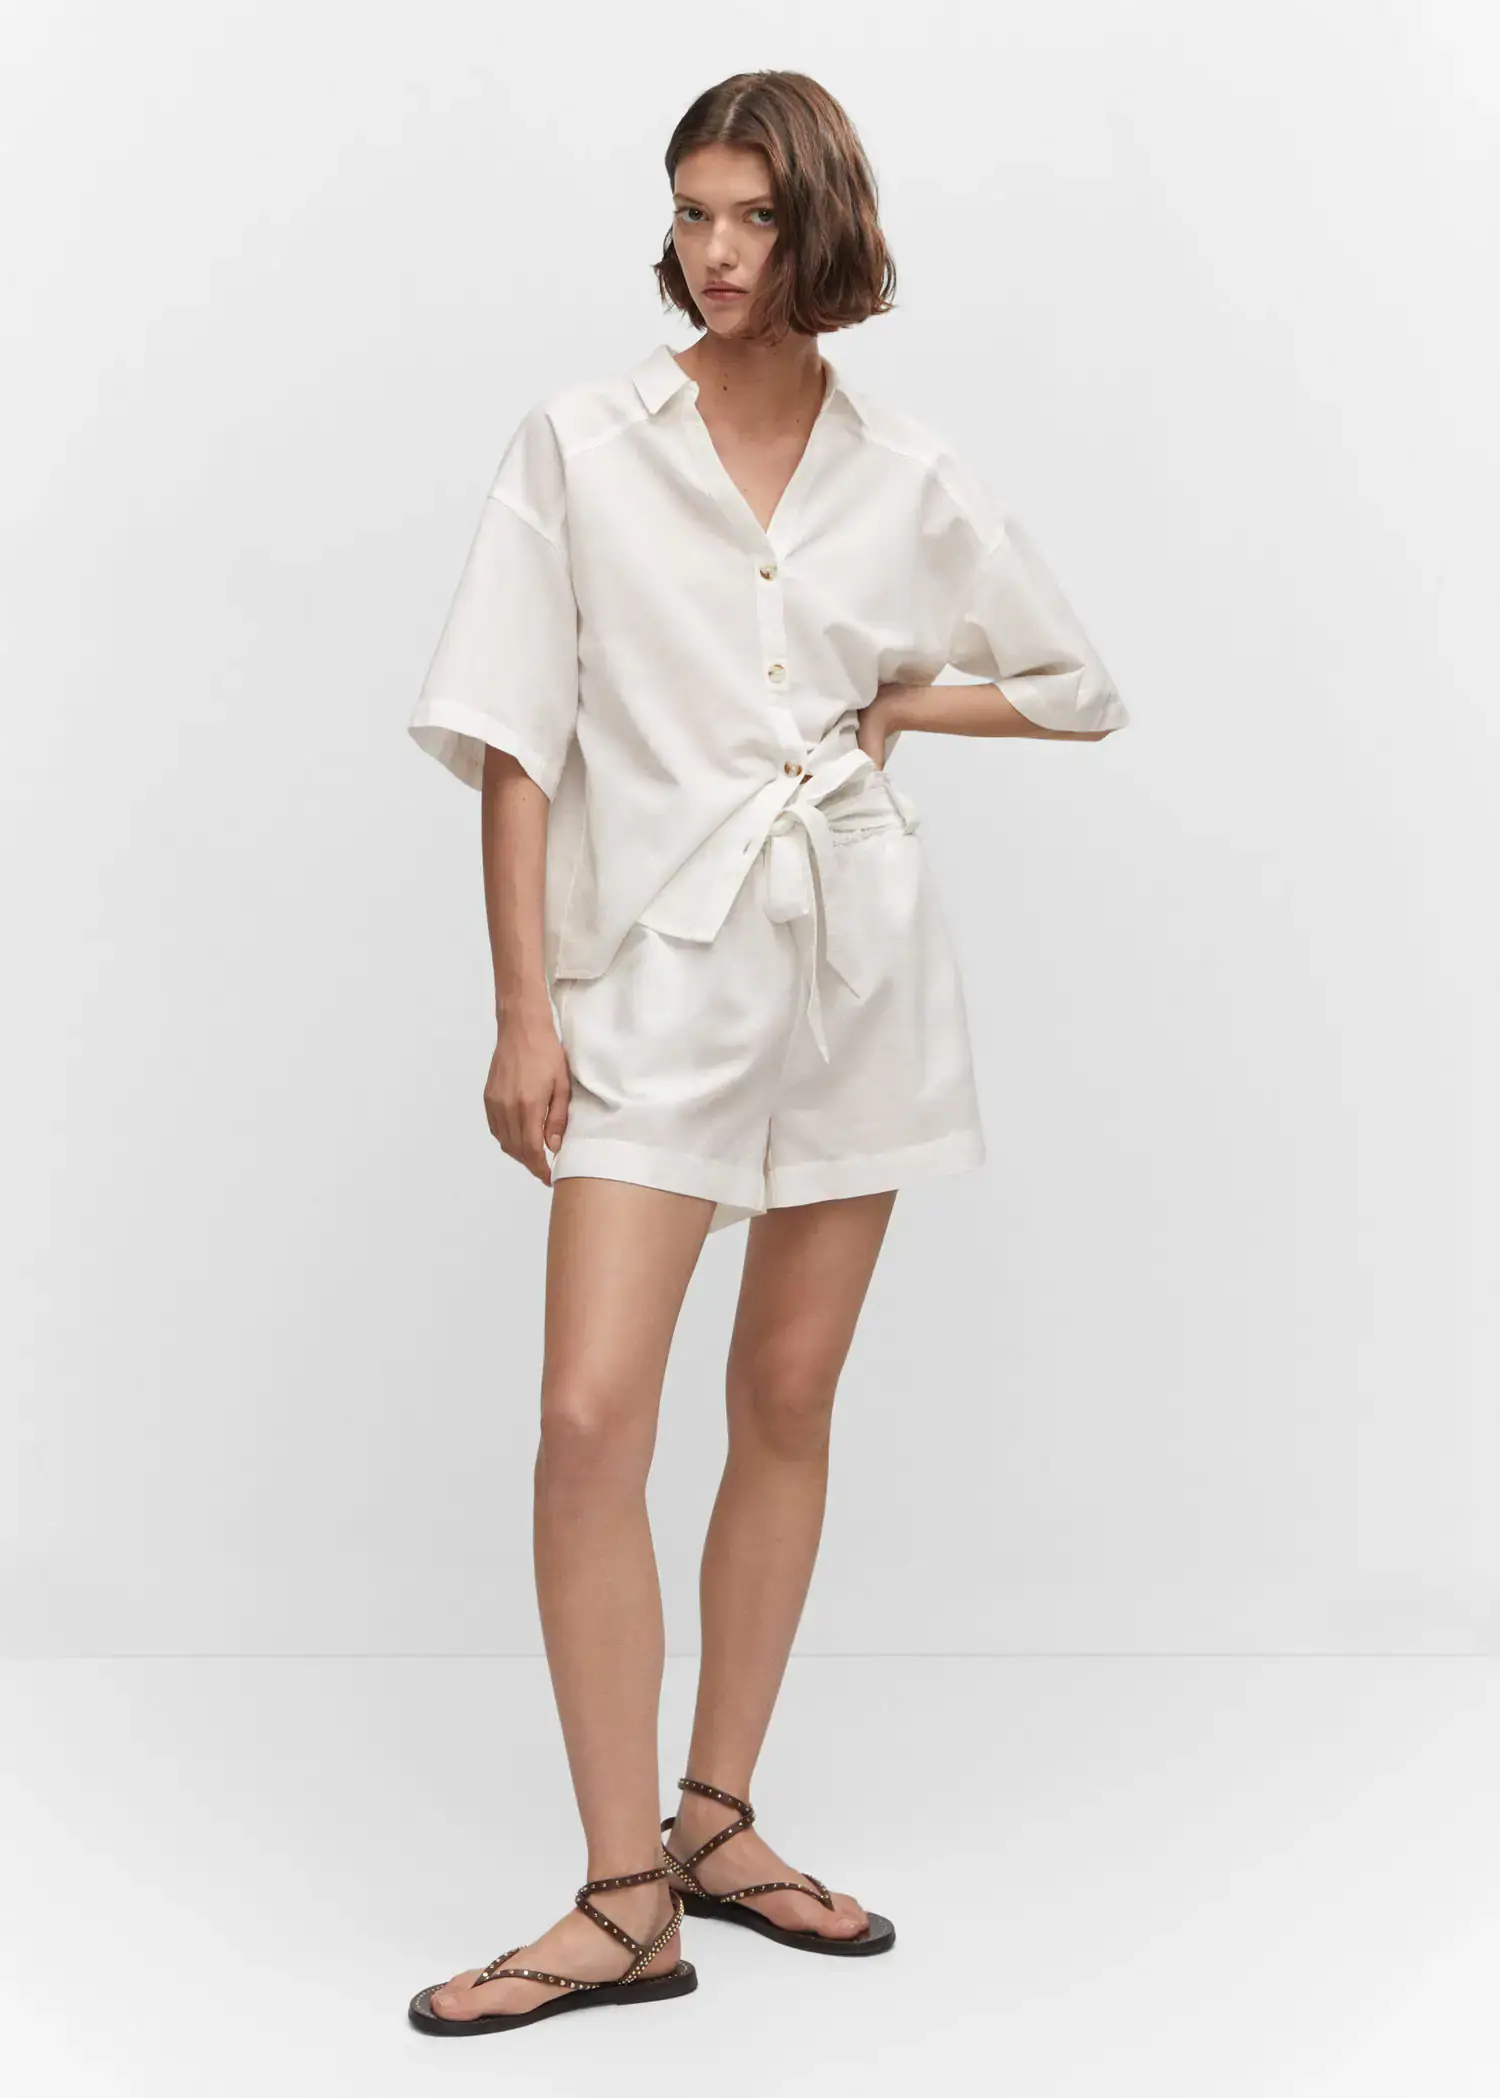 Mango Cotton linen shorts. a woman wearing a white shirt and shorts. 